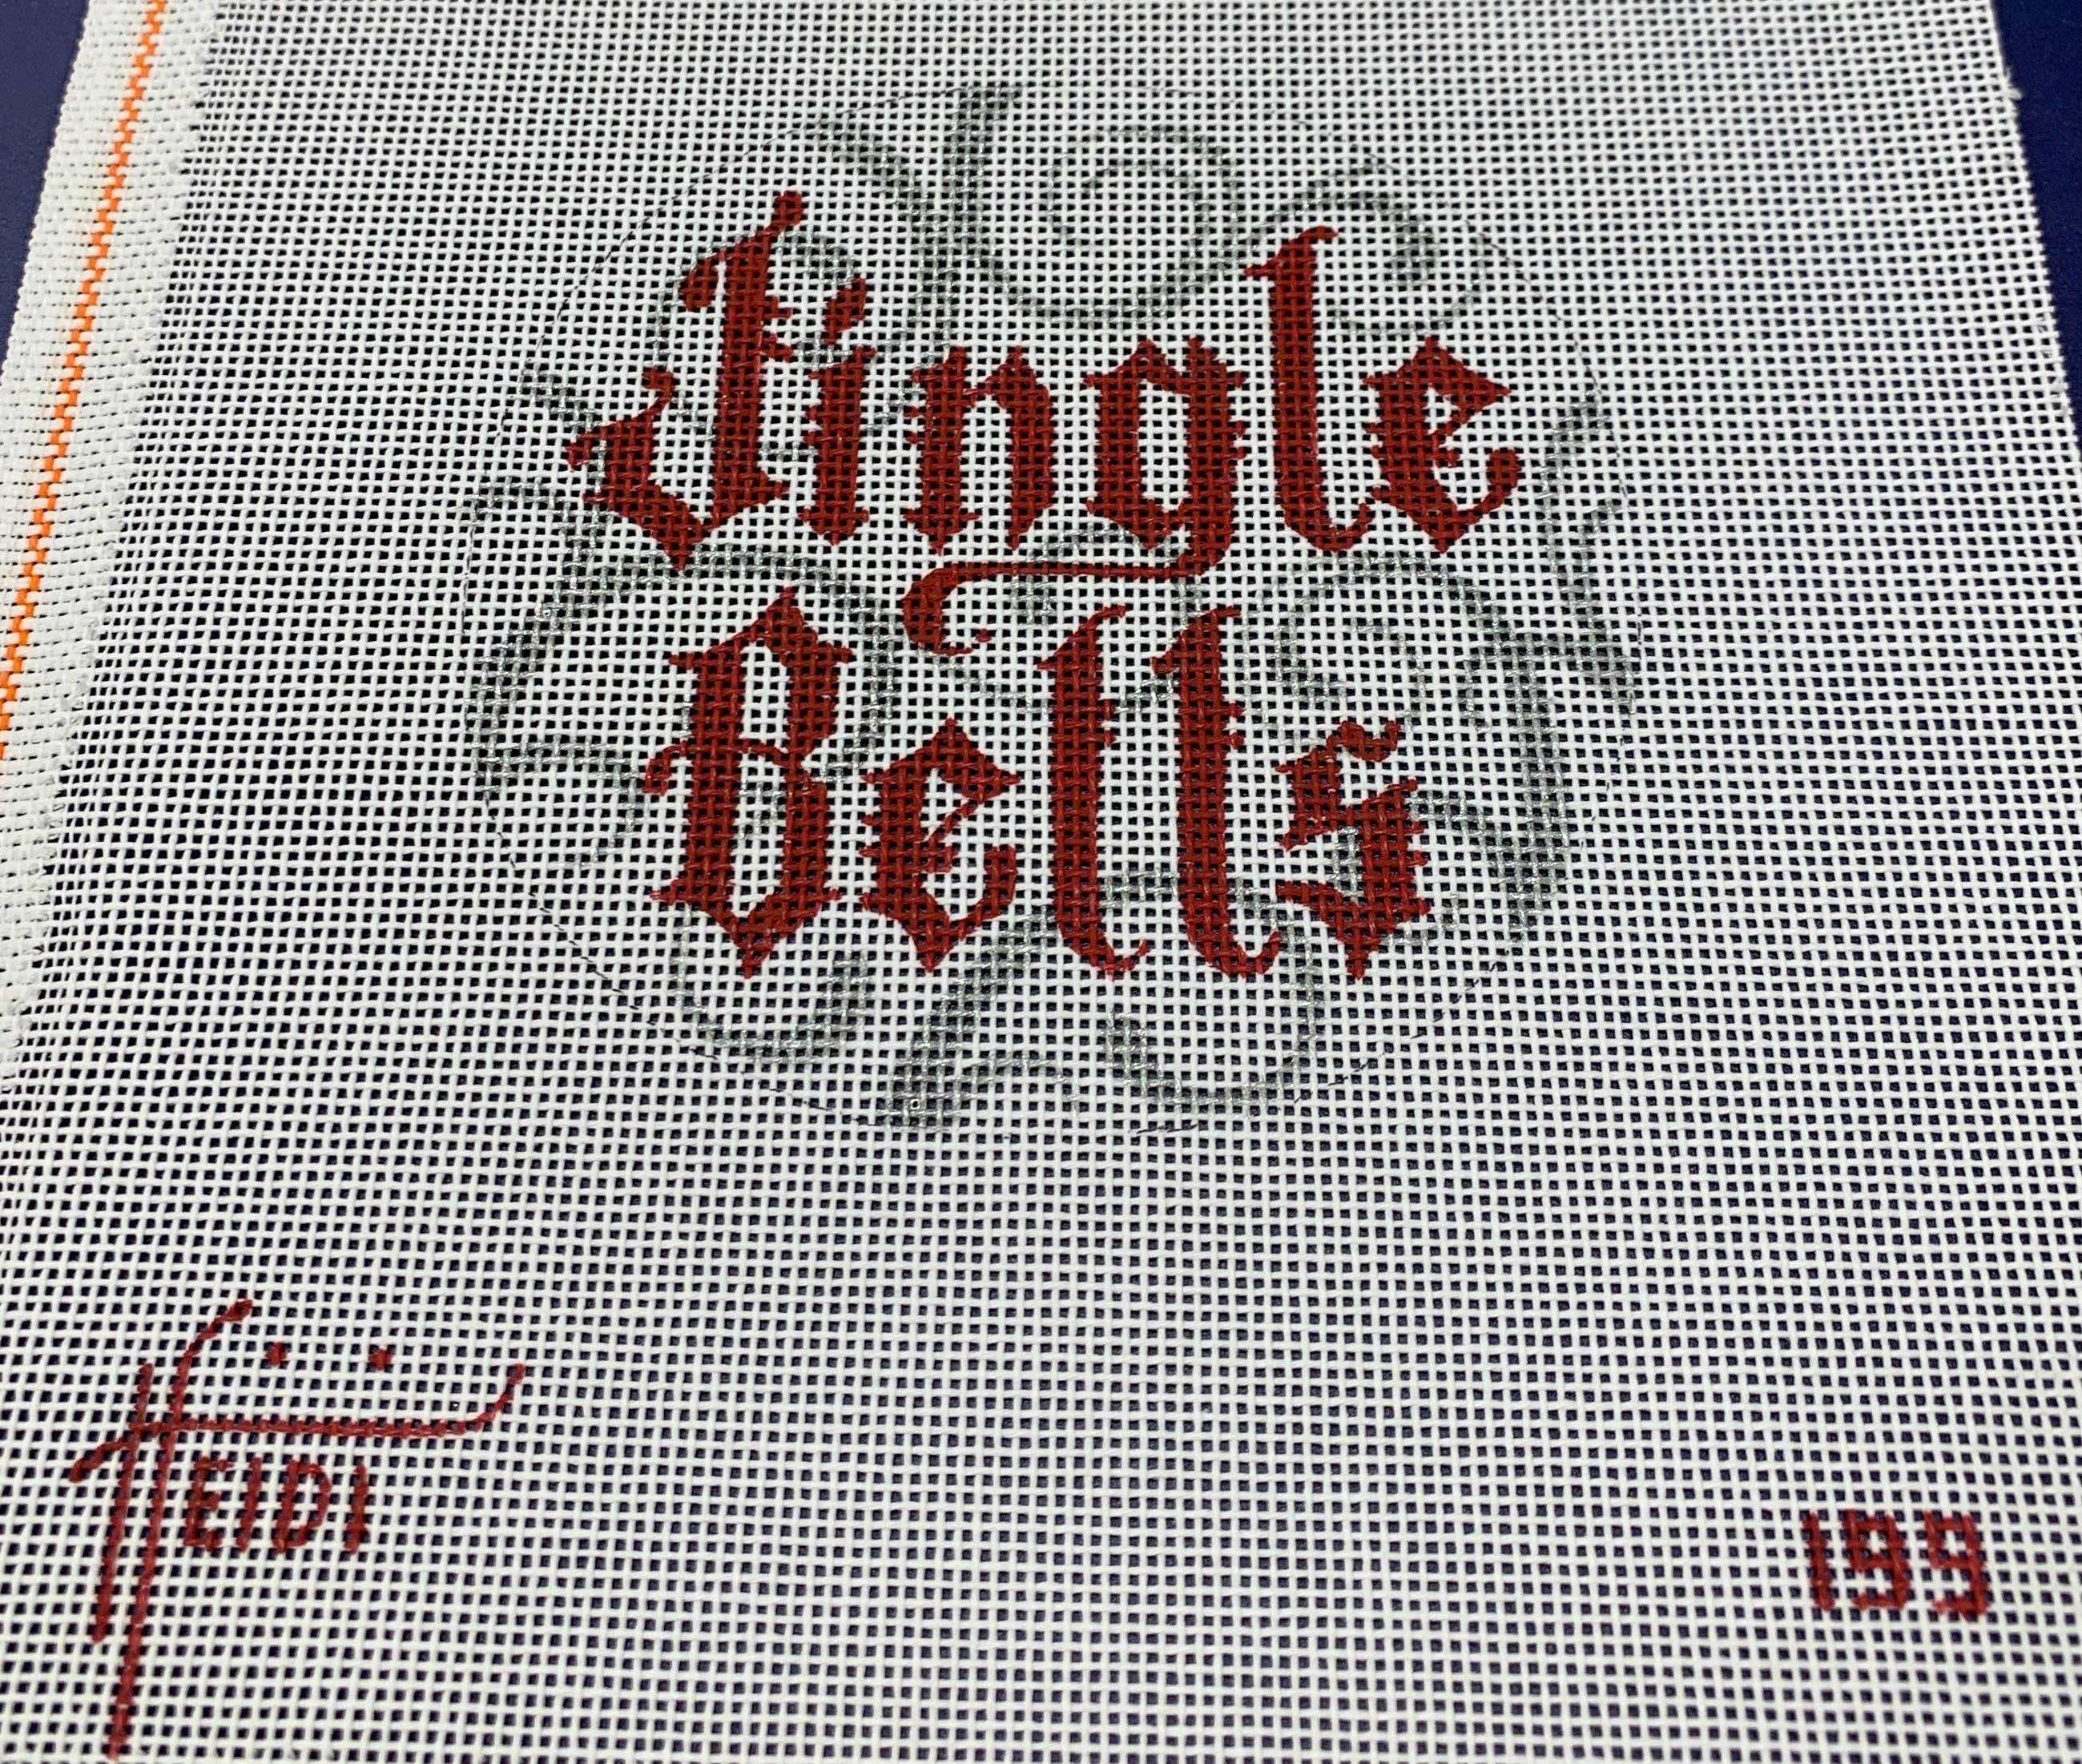 Heidi 199 Jingle Bells